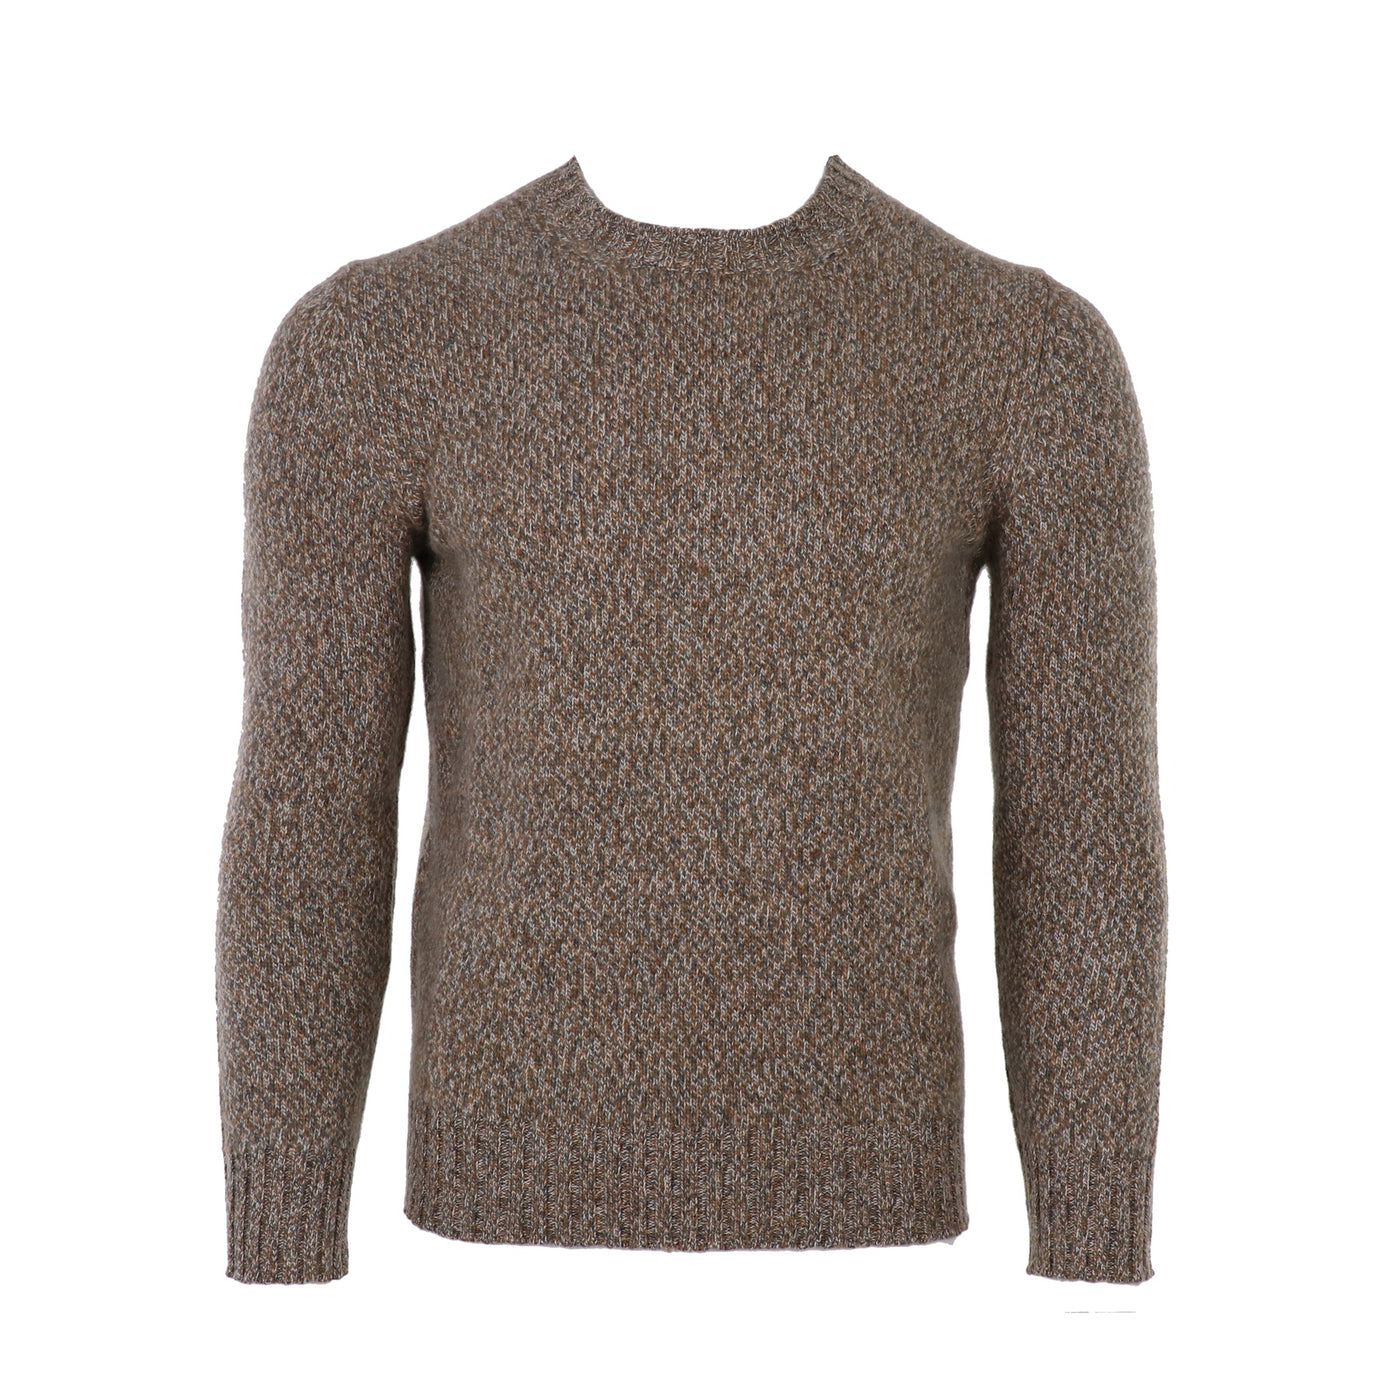 The Cashmere Twist Crewneck Sweater